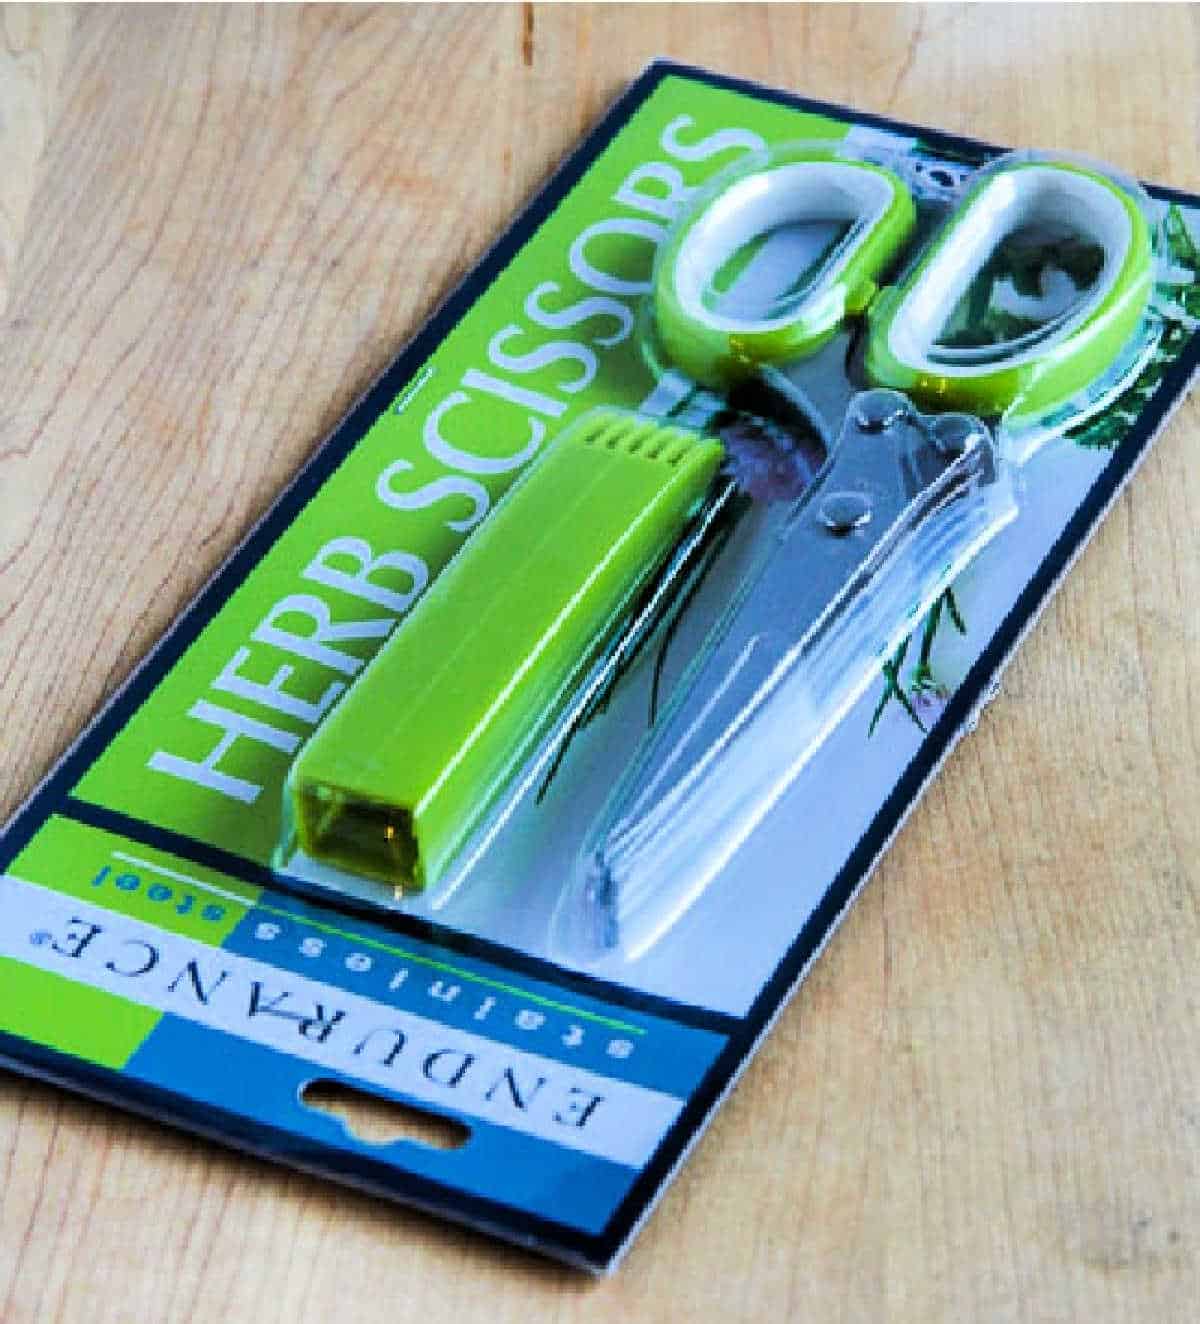 Kalyn's Kitchen Picks:  Herb Scissors photo showing herb scissors in package.